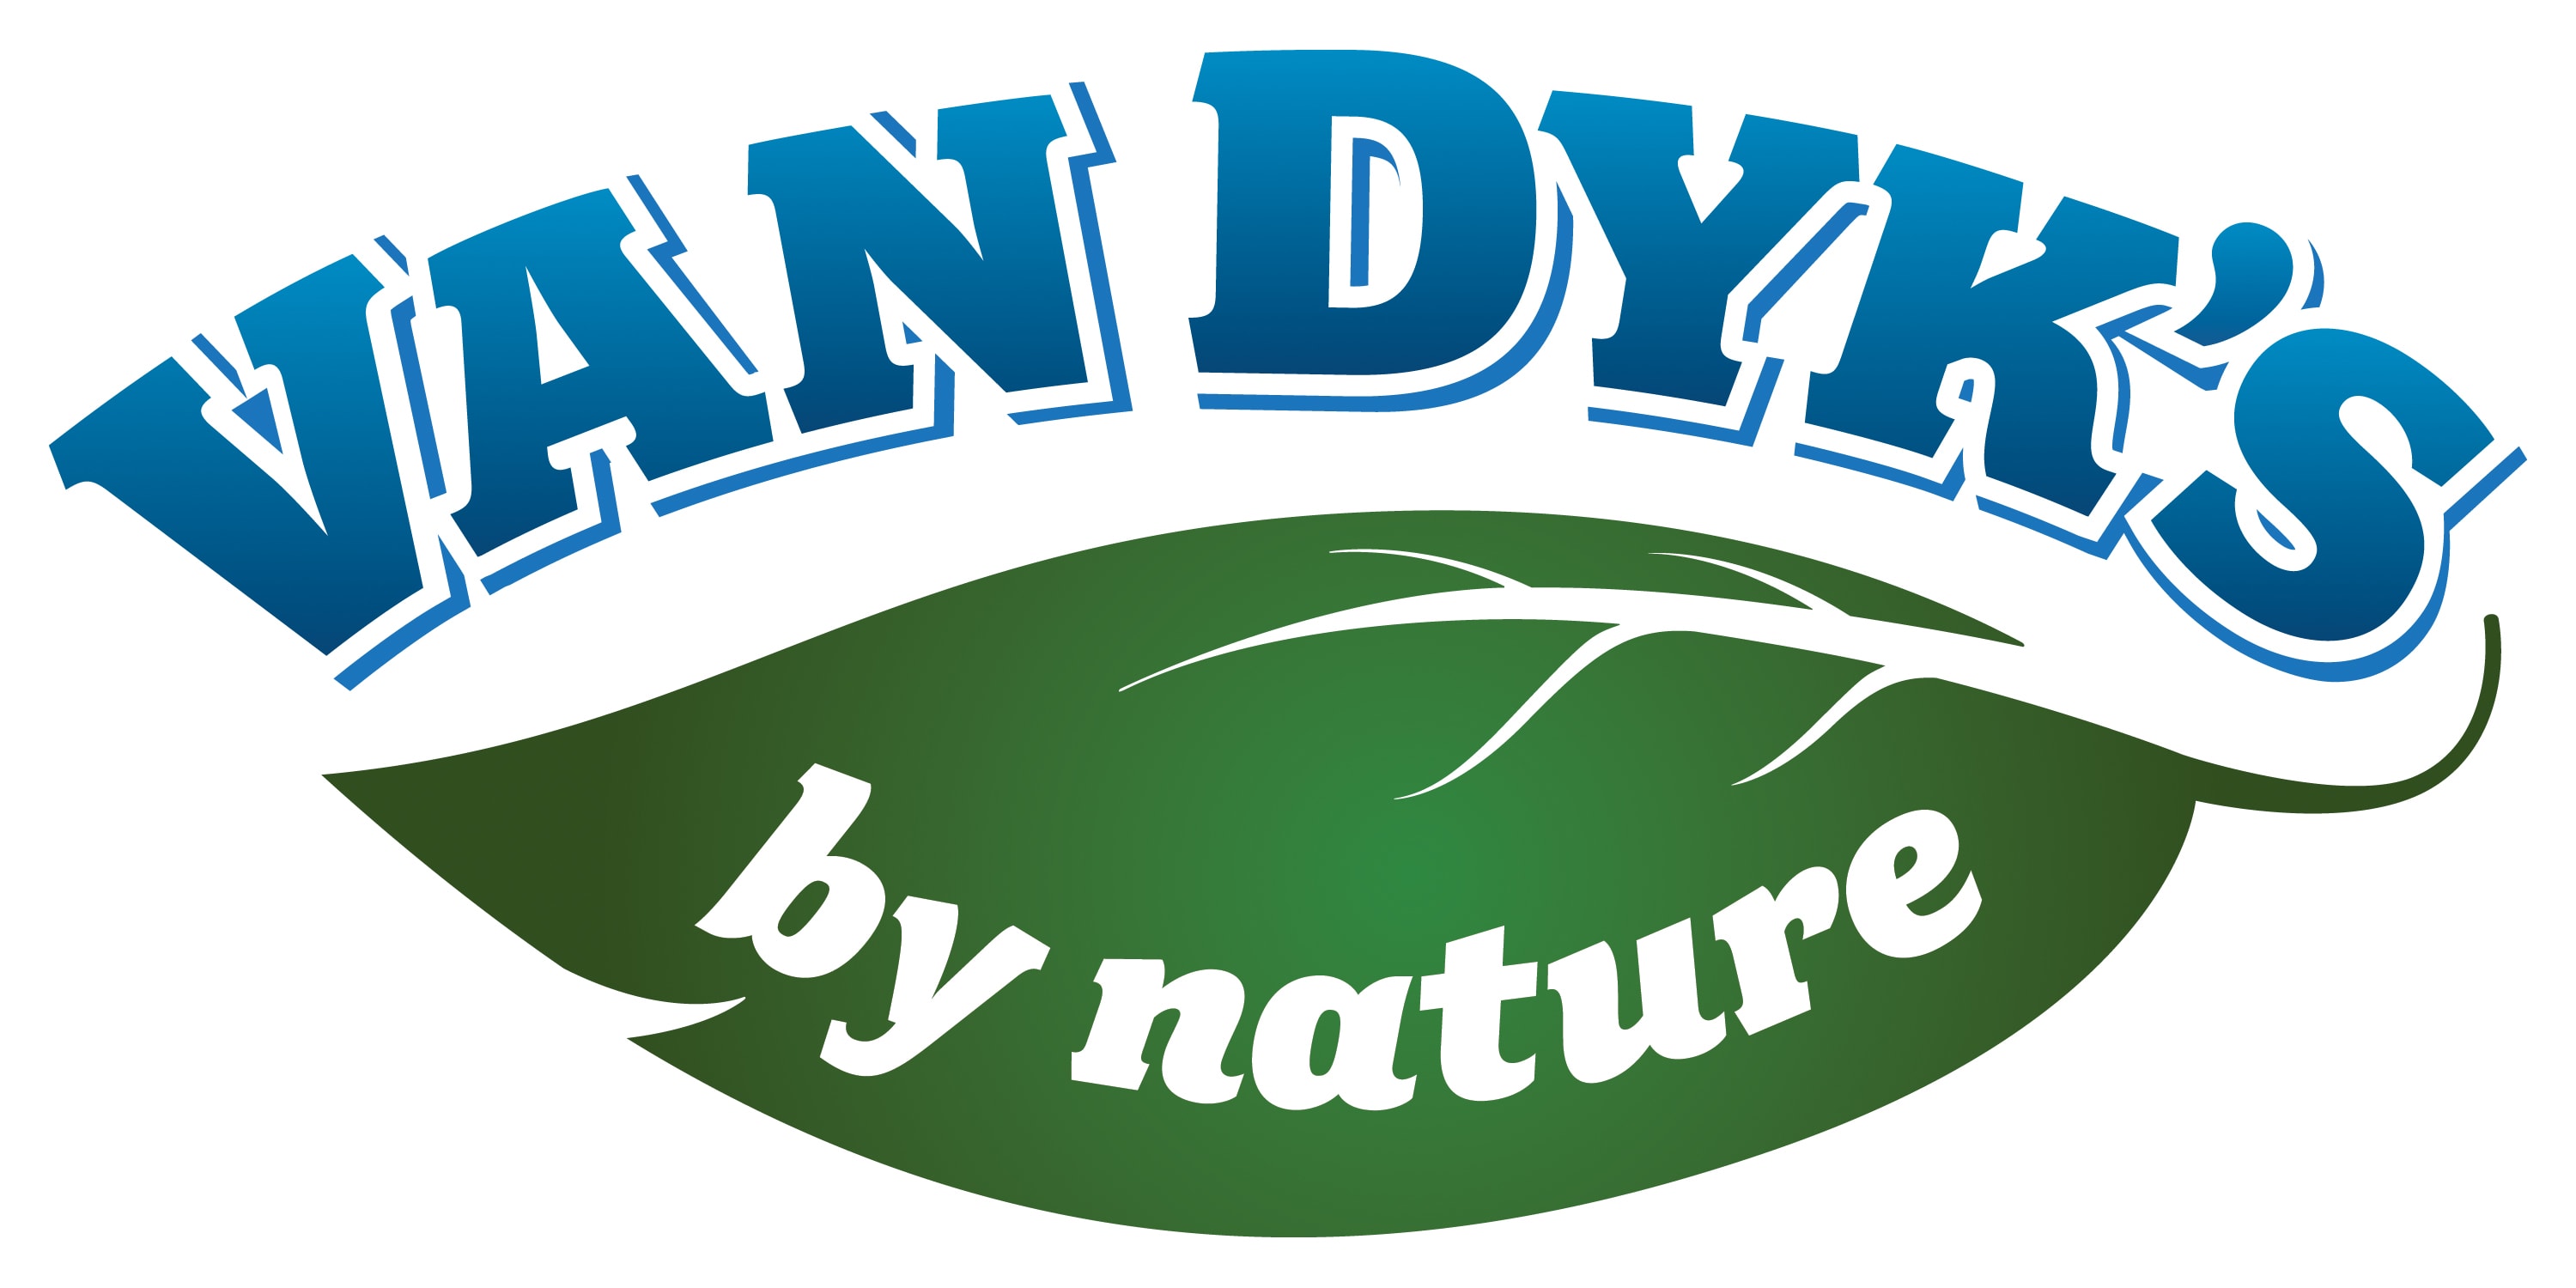 Van Dyk's Health Juice Products Ltd.